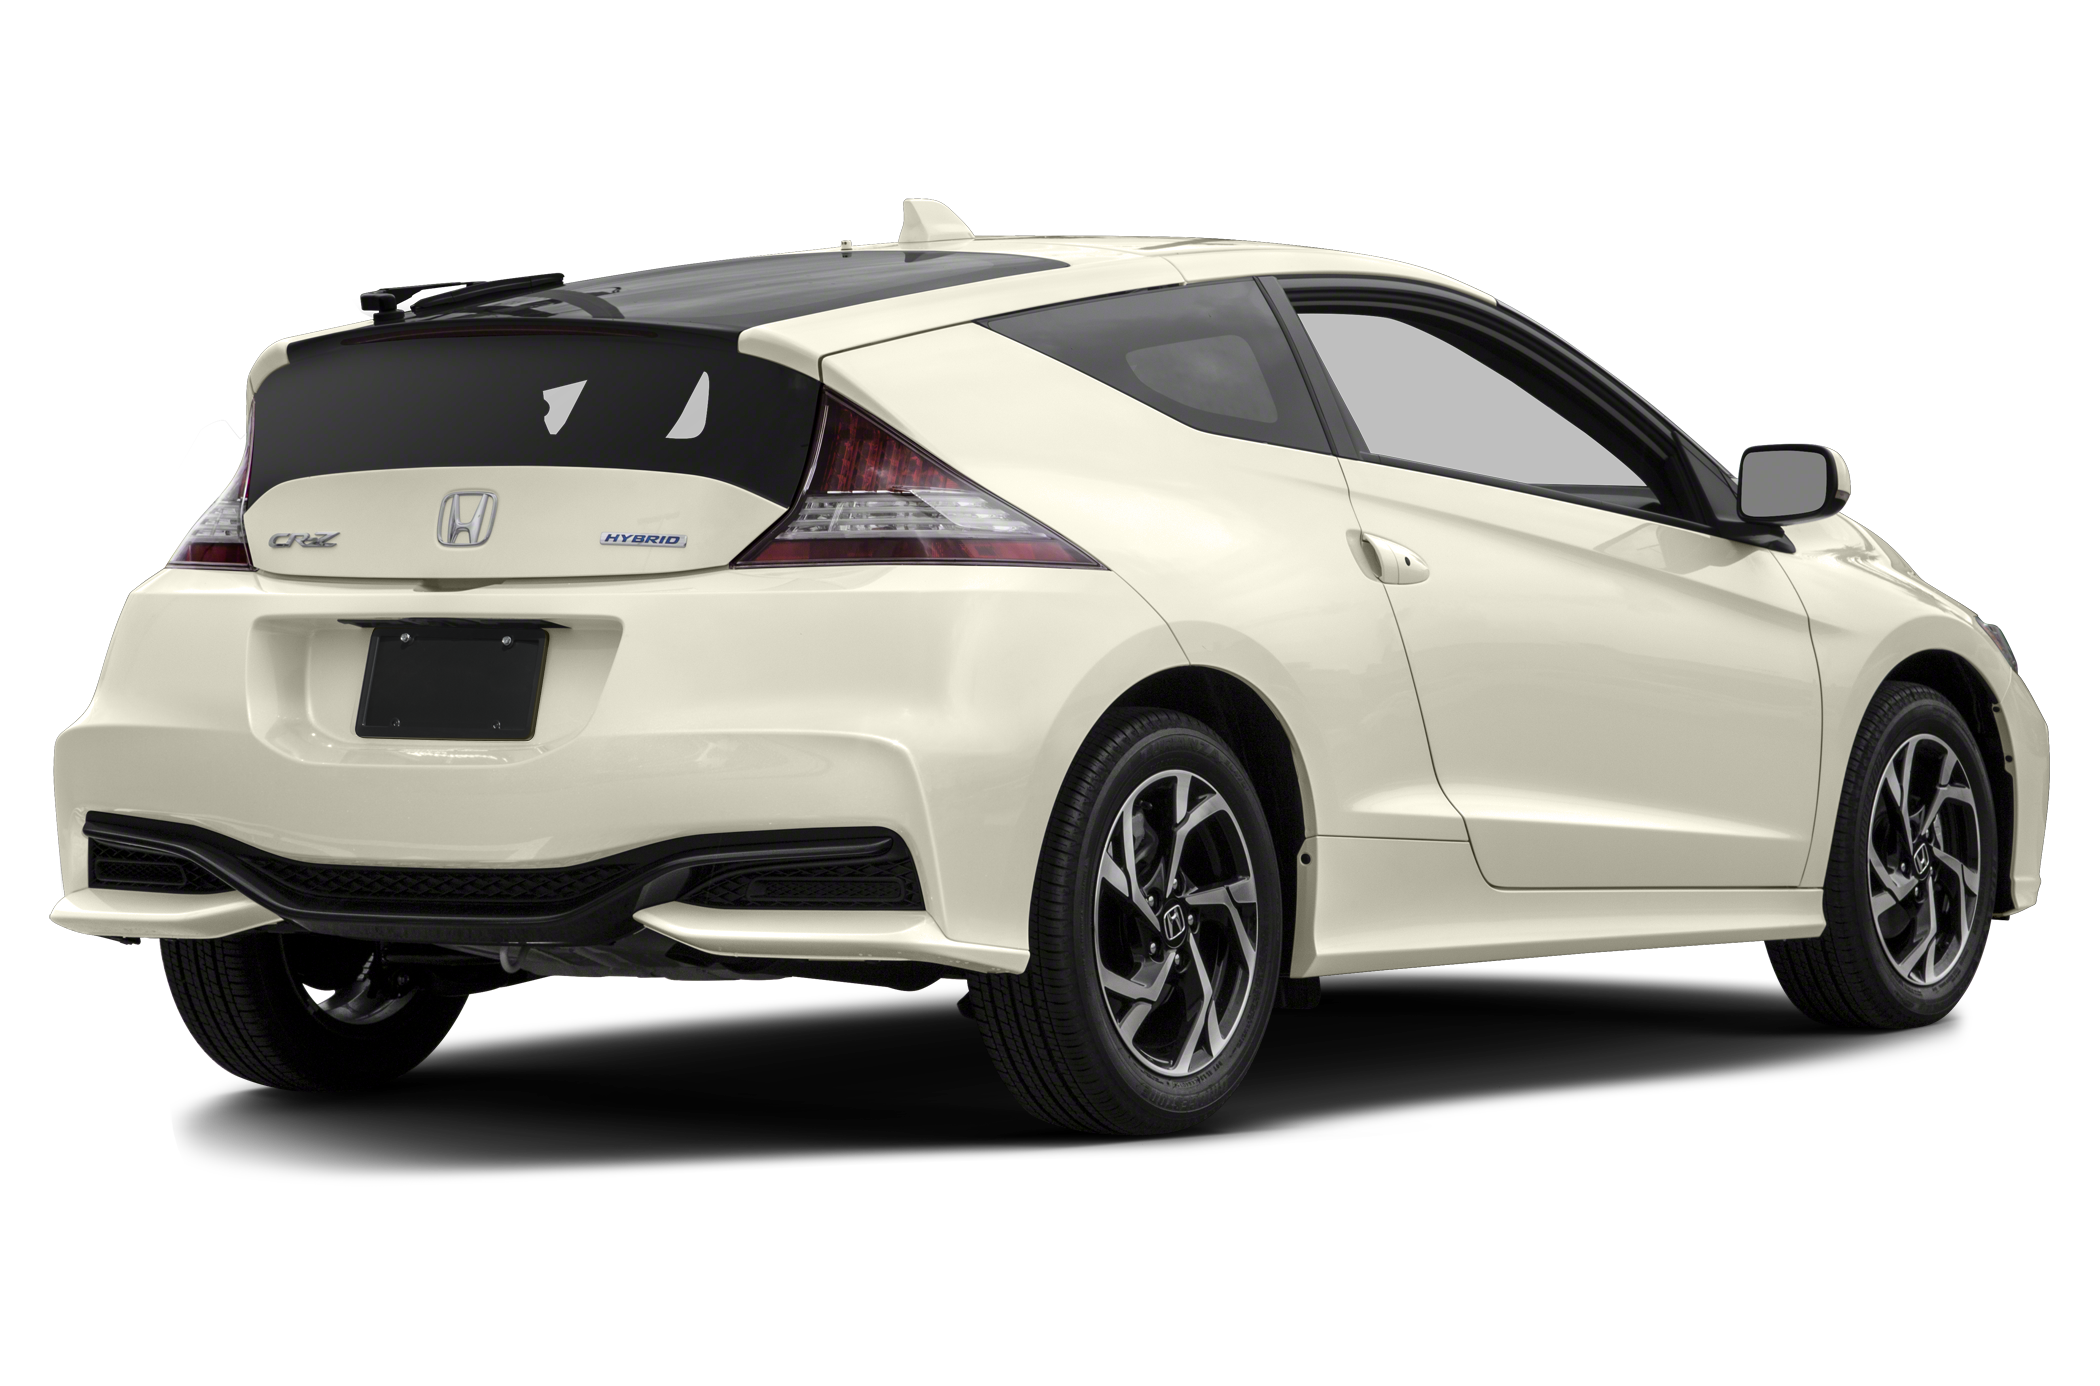 Honda CR-Z Models, Generations & Redesigns